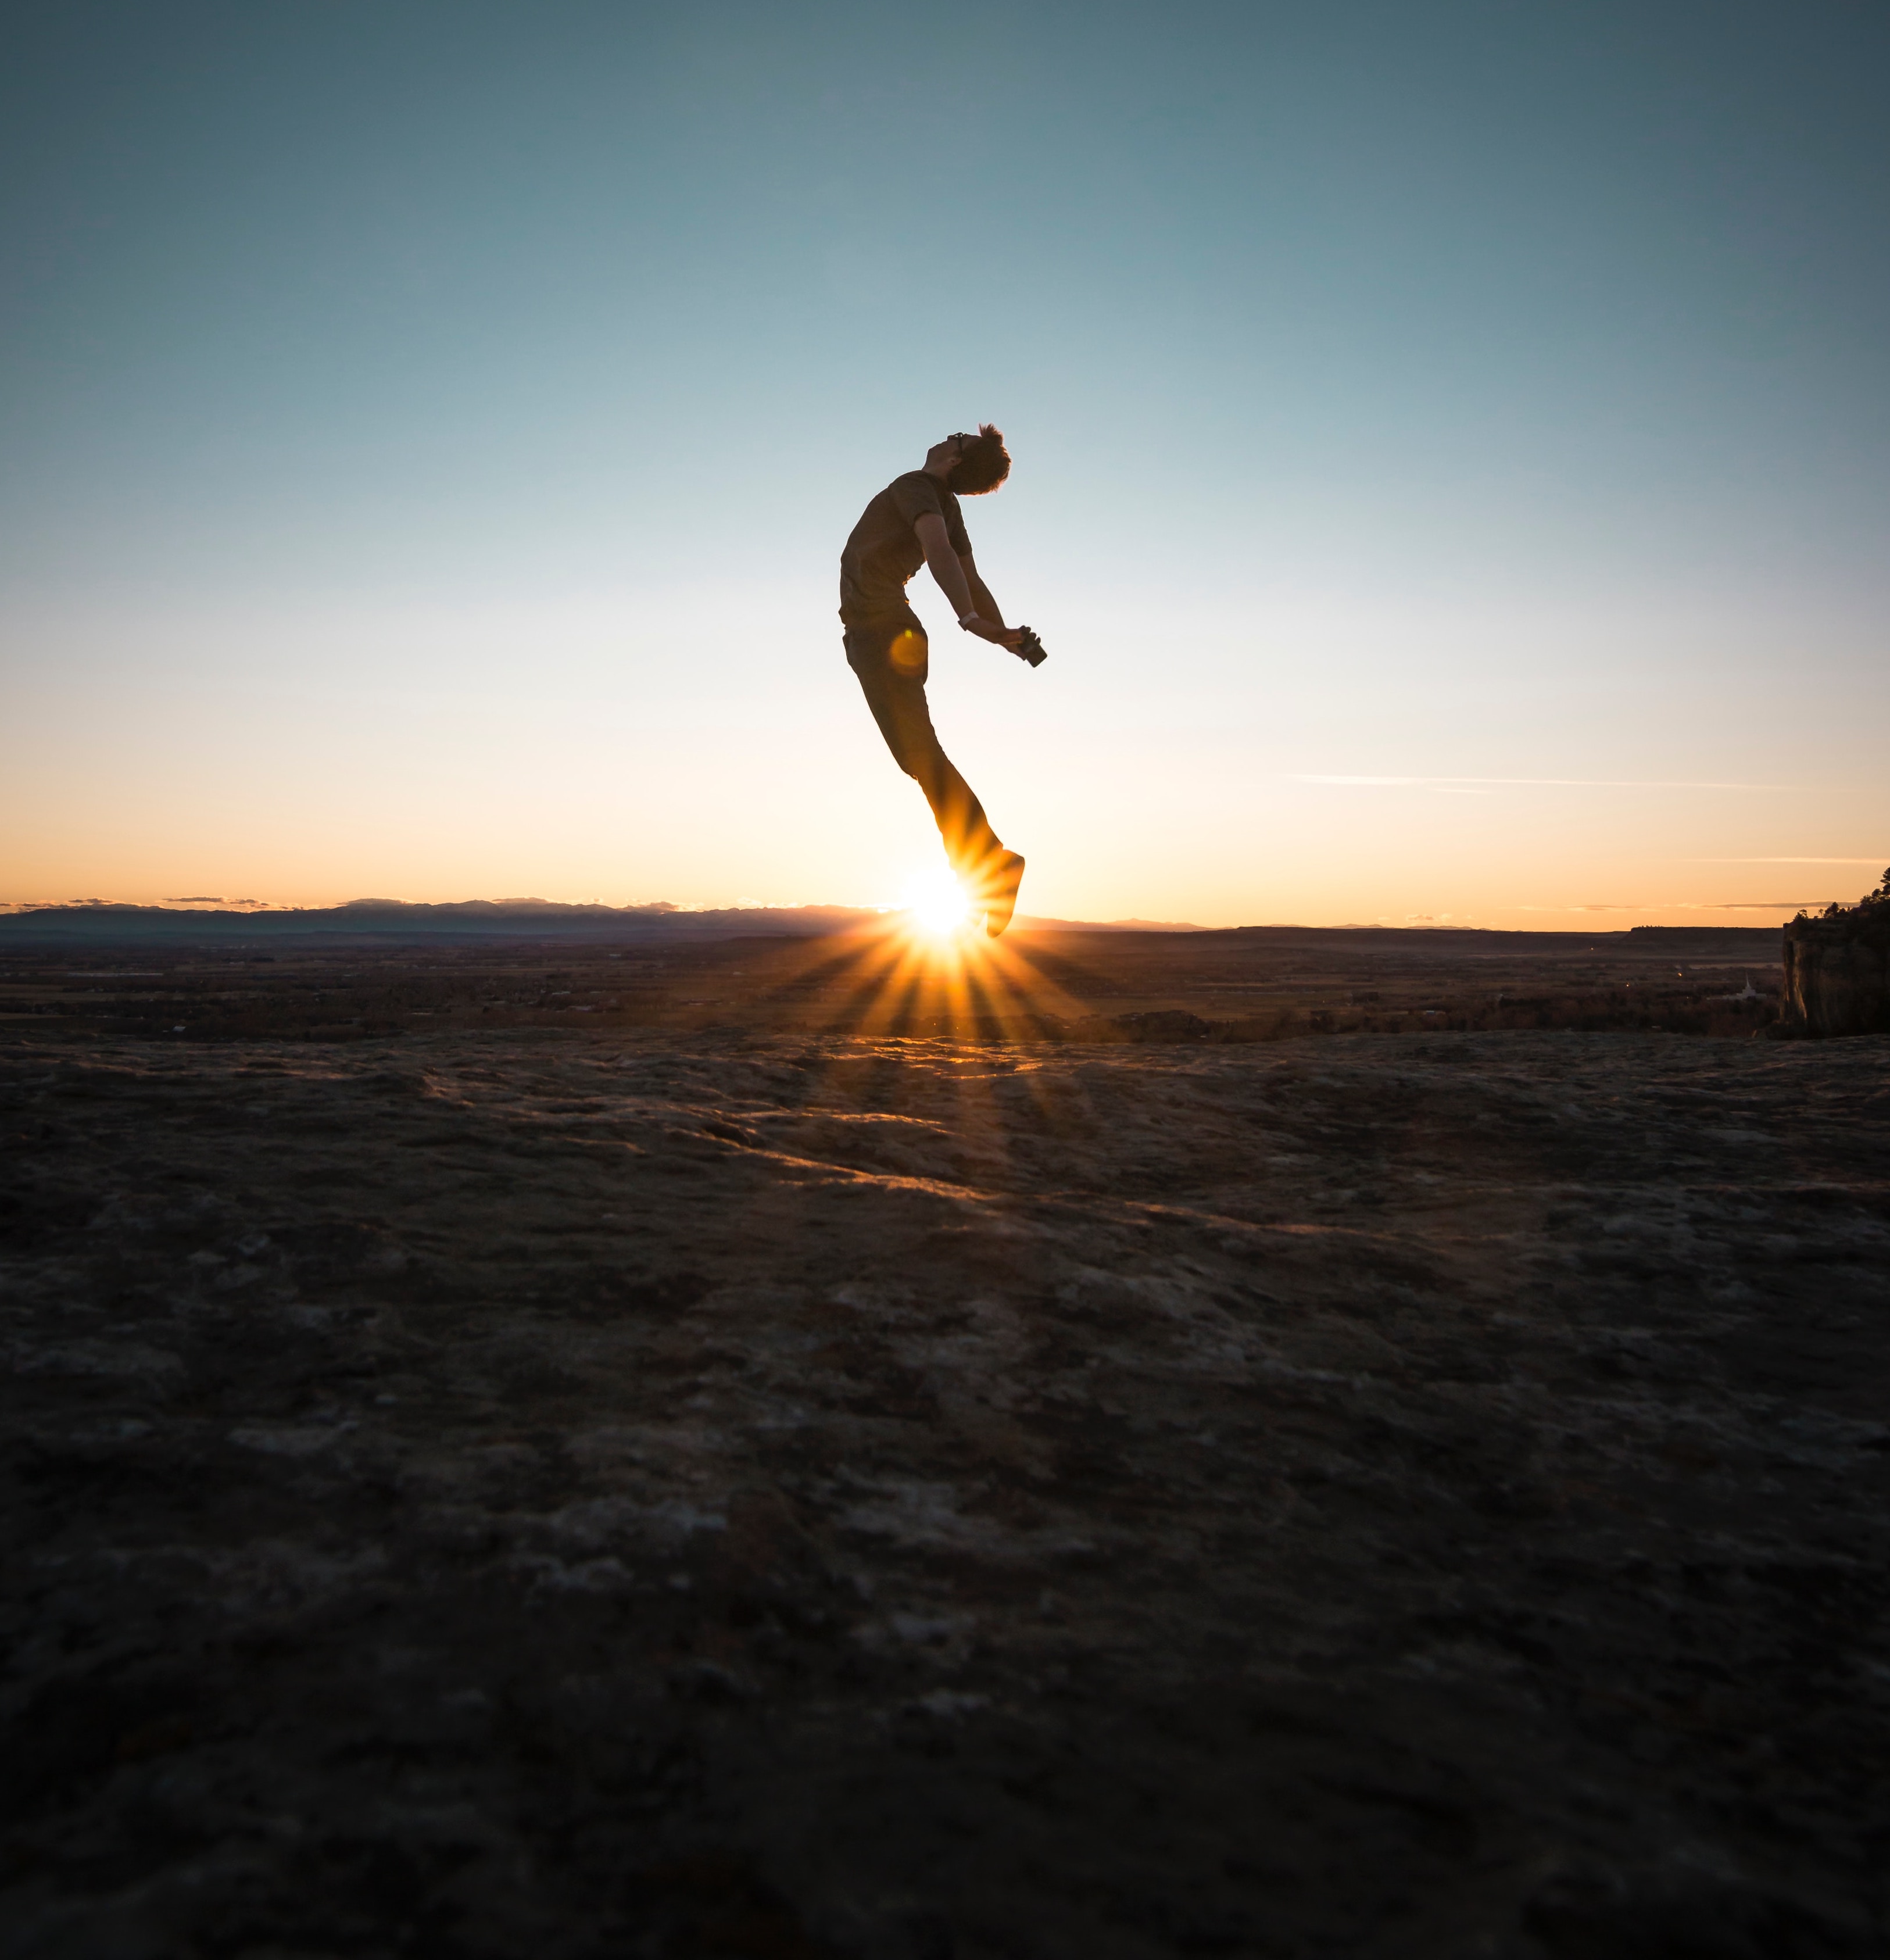 man jumping at sunset by steve-halama-8Bm5IUQ387A-unsplash small